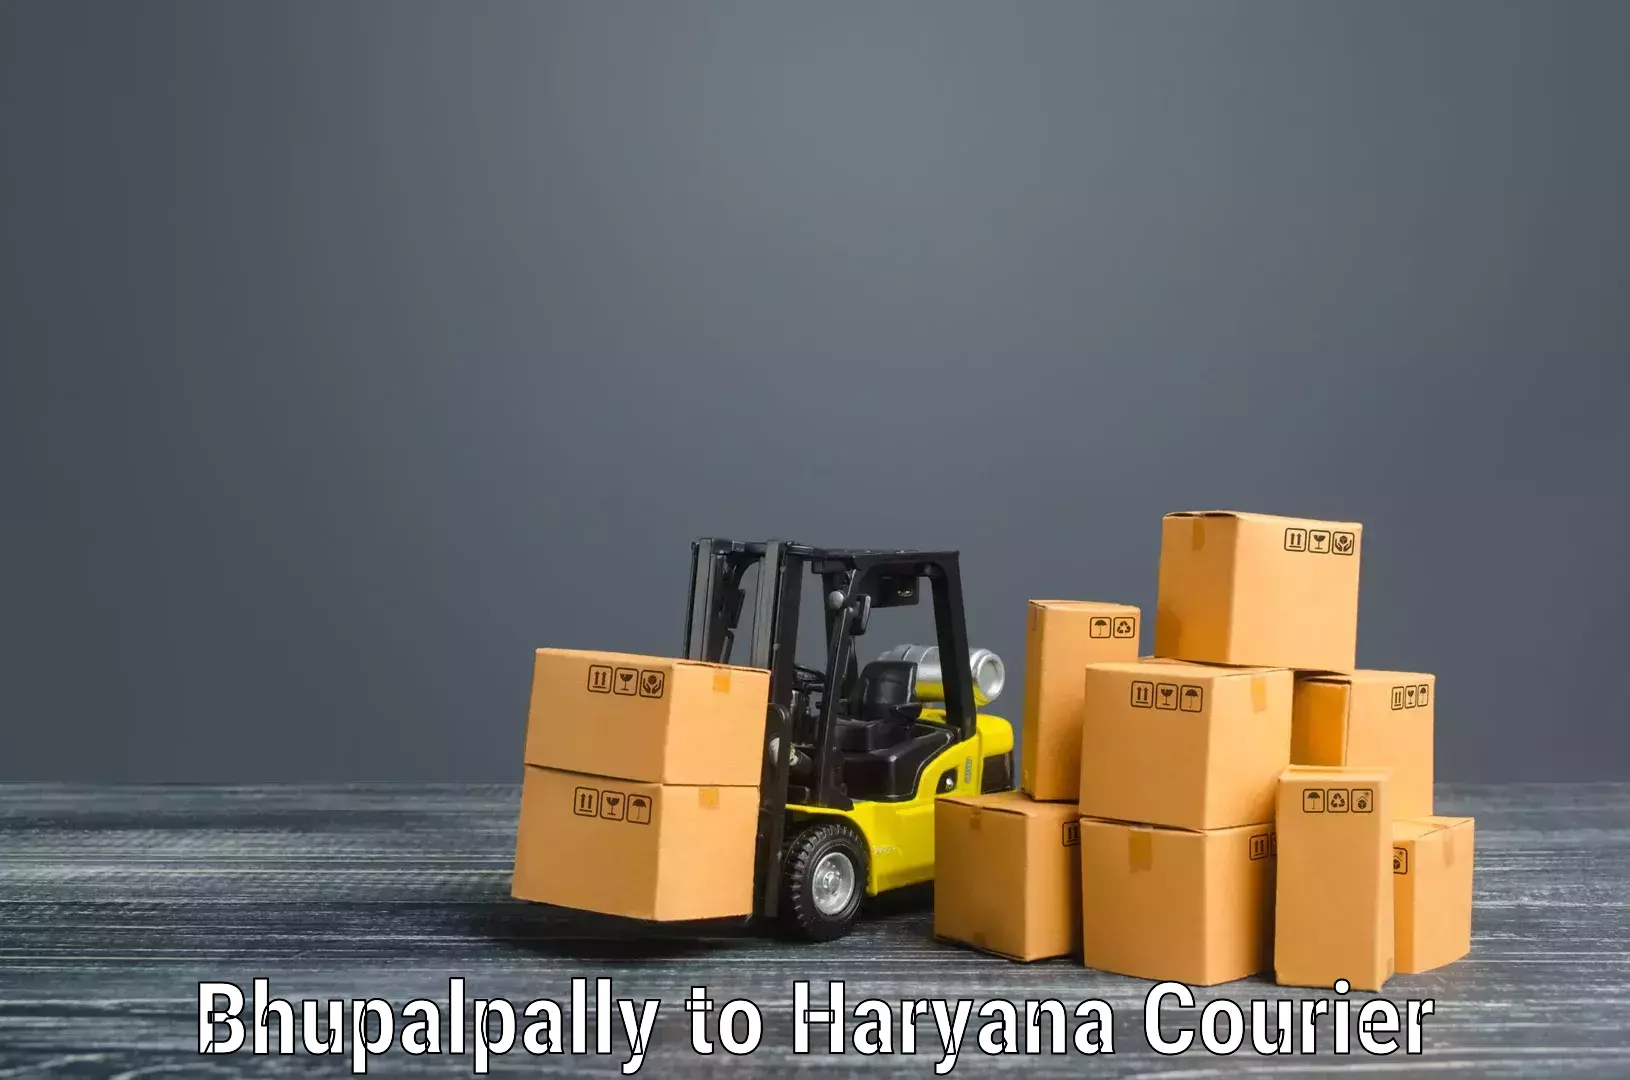 Furniture transport company Bhupalpally to NCR Haryana